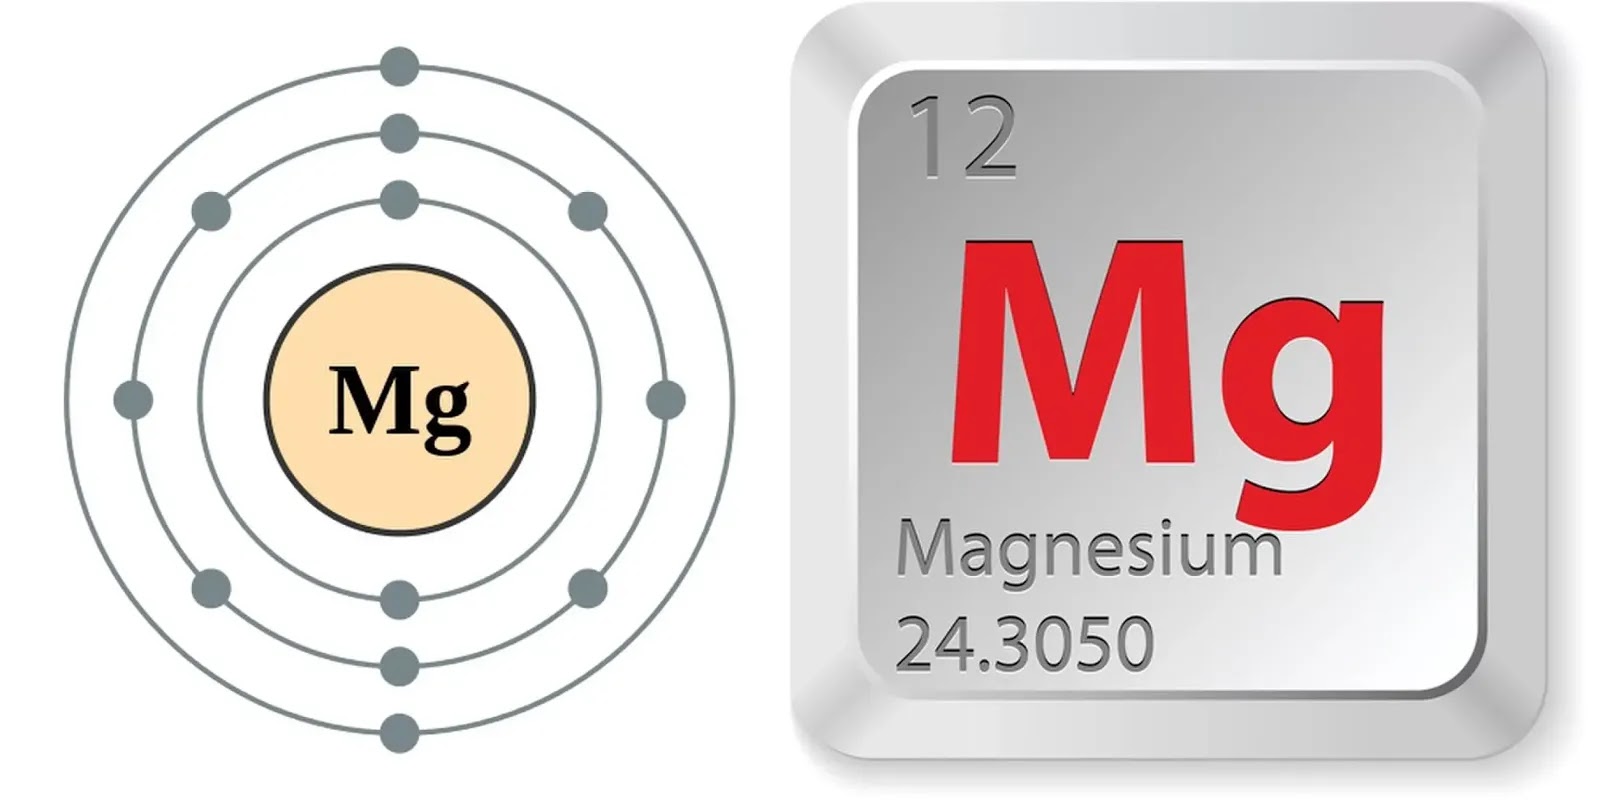 Магний название элемента. Магний химический элемент. Магний символ химического элемента. Магний в таблице Менделеева. Магний в таблице Менделеева обозначение.